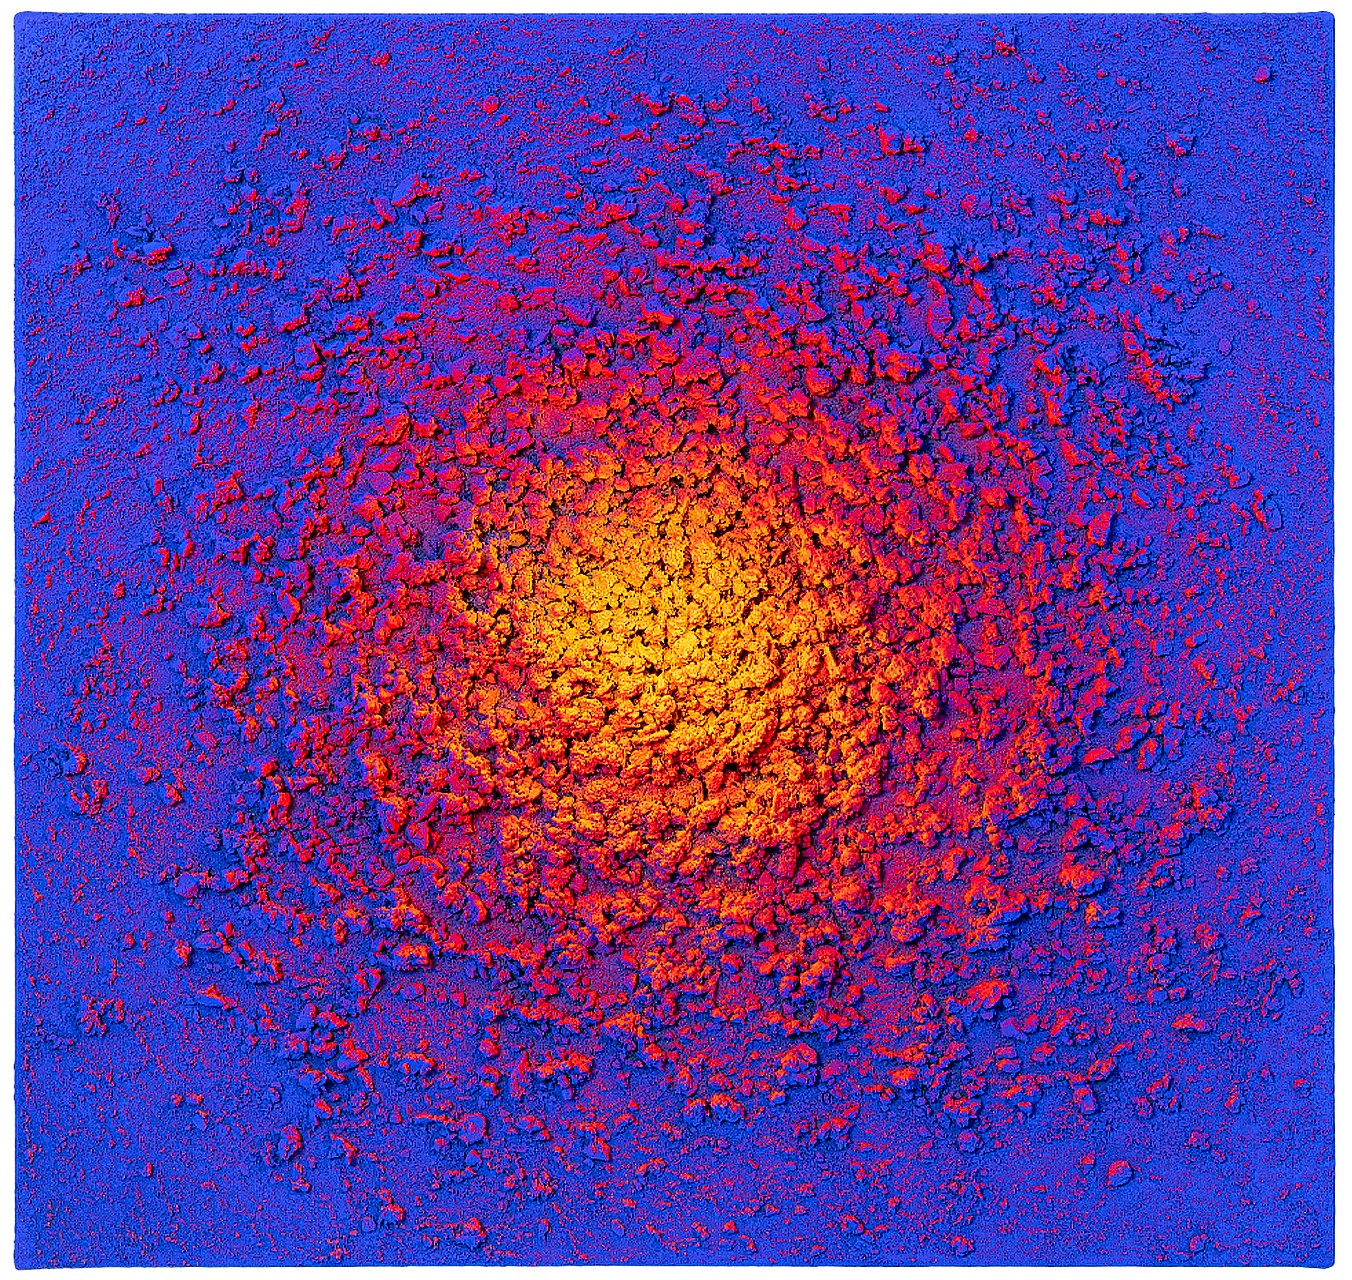 Interstellar Red Blue Yellow 18.18 - SAMUEL DEJONG - Galeries Bartoux